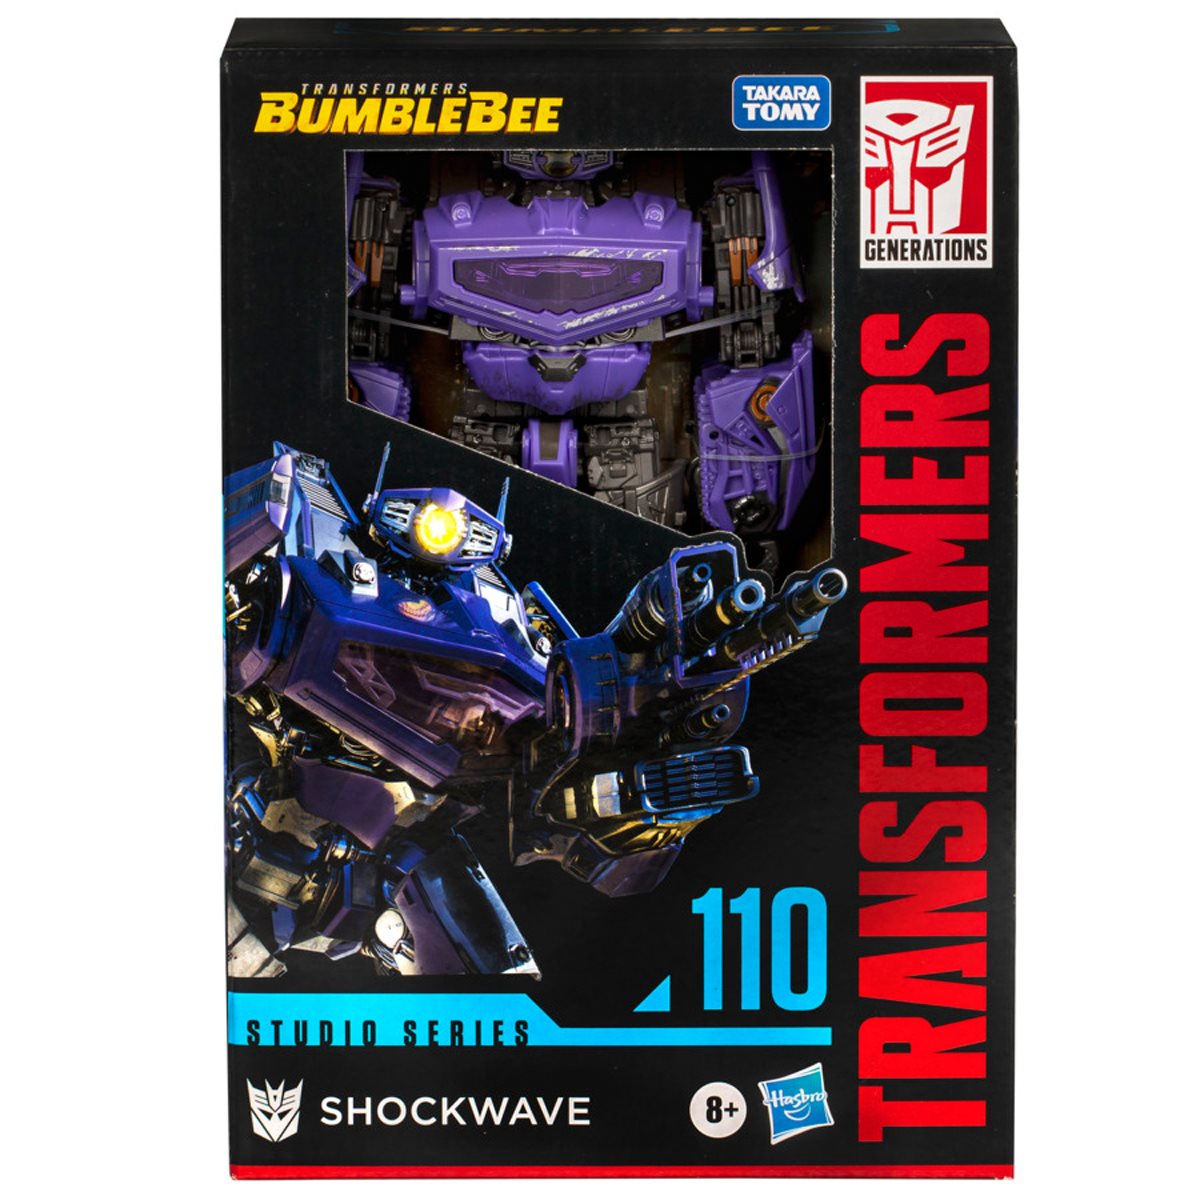 Transformers Studios Series Voyager Class: Bumblebee - Shockwave 110